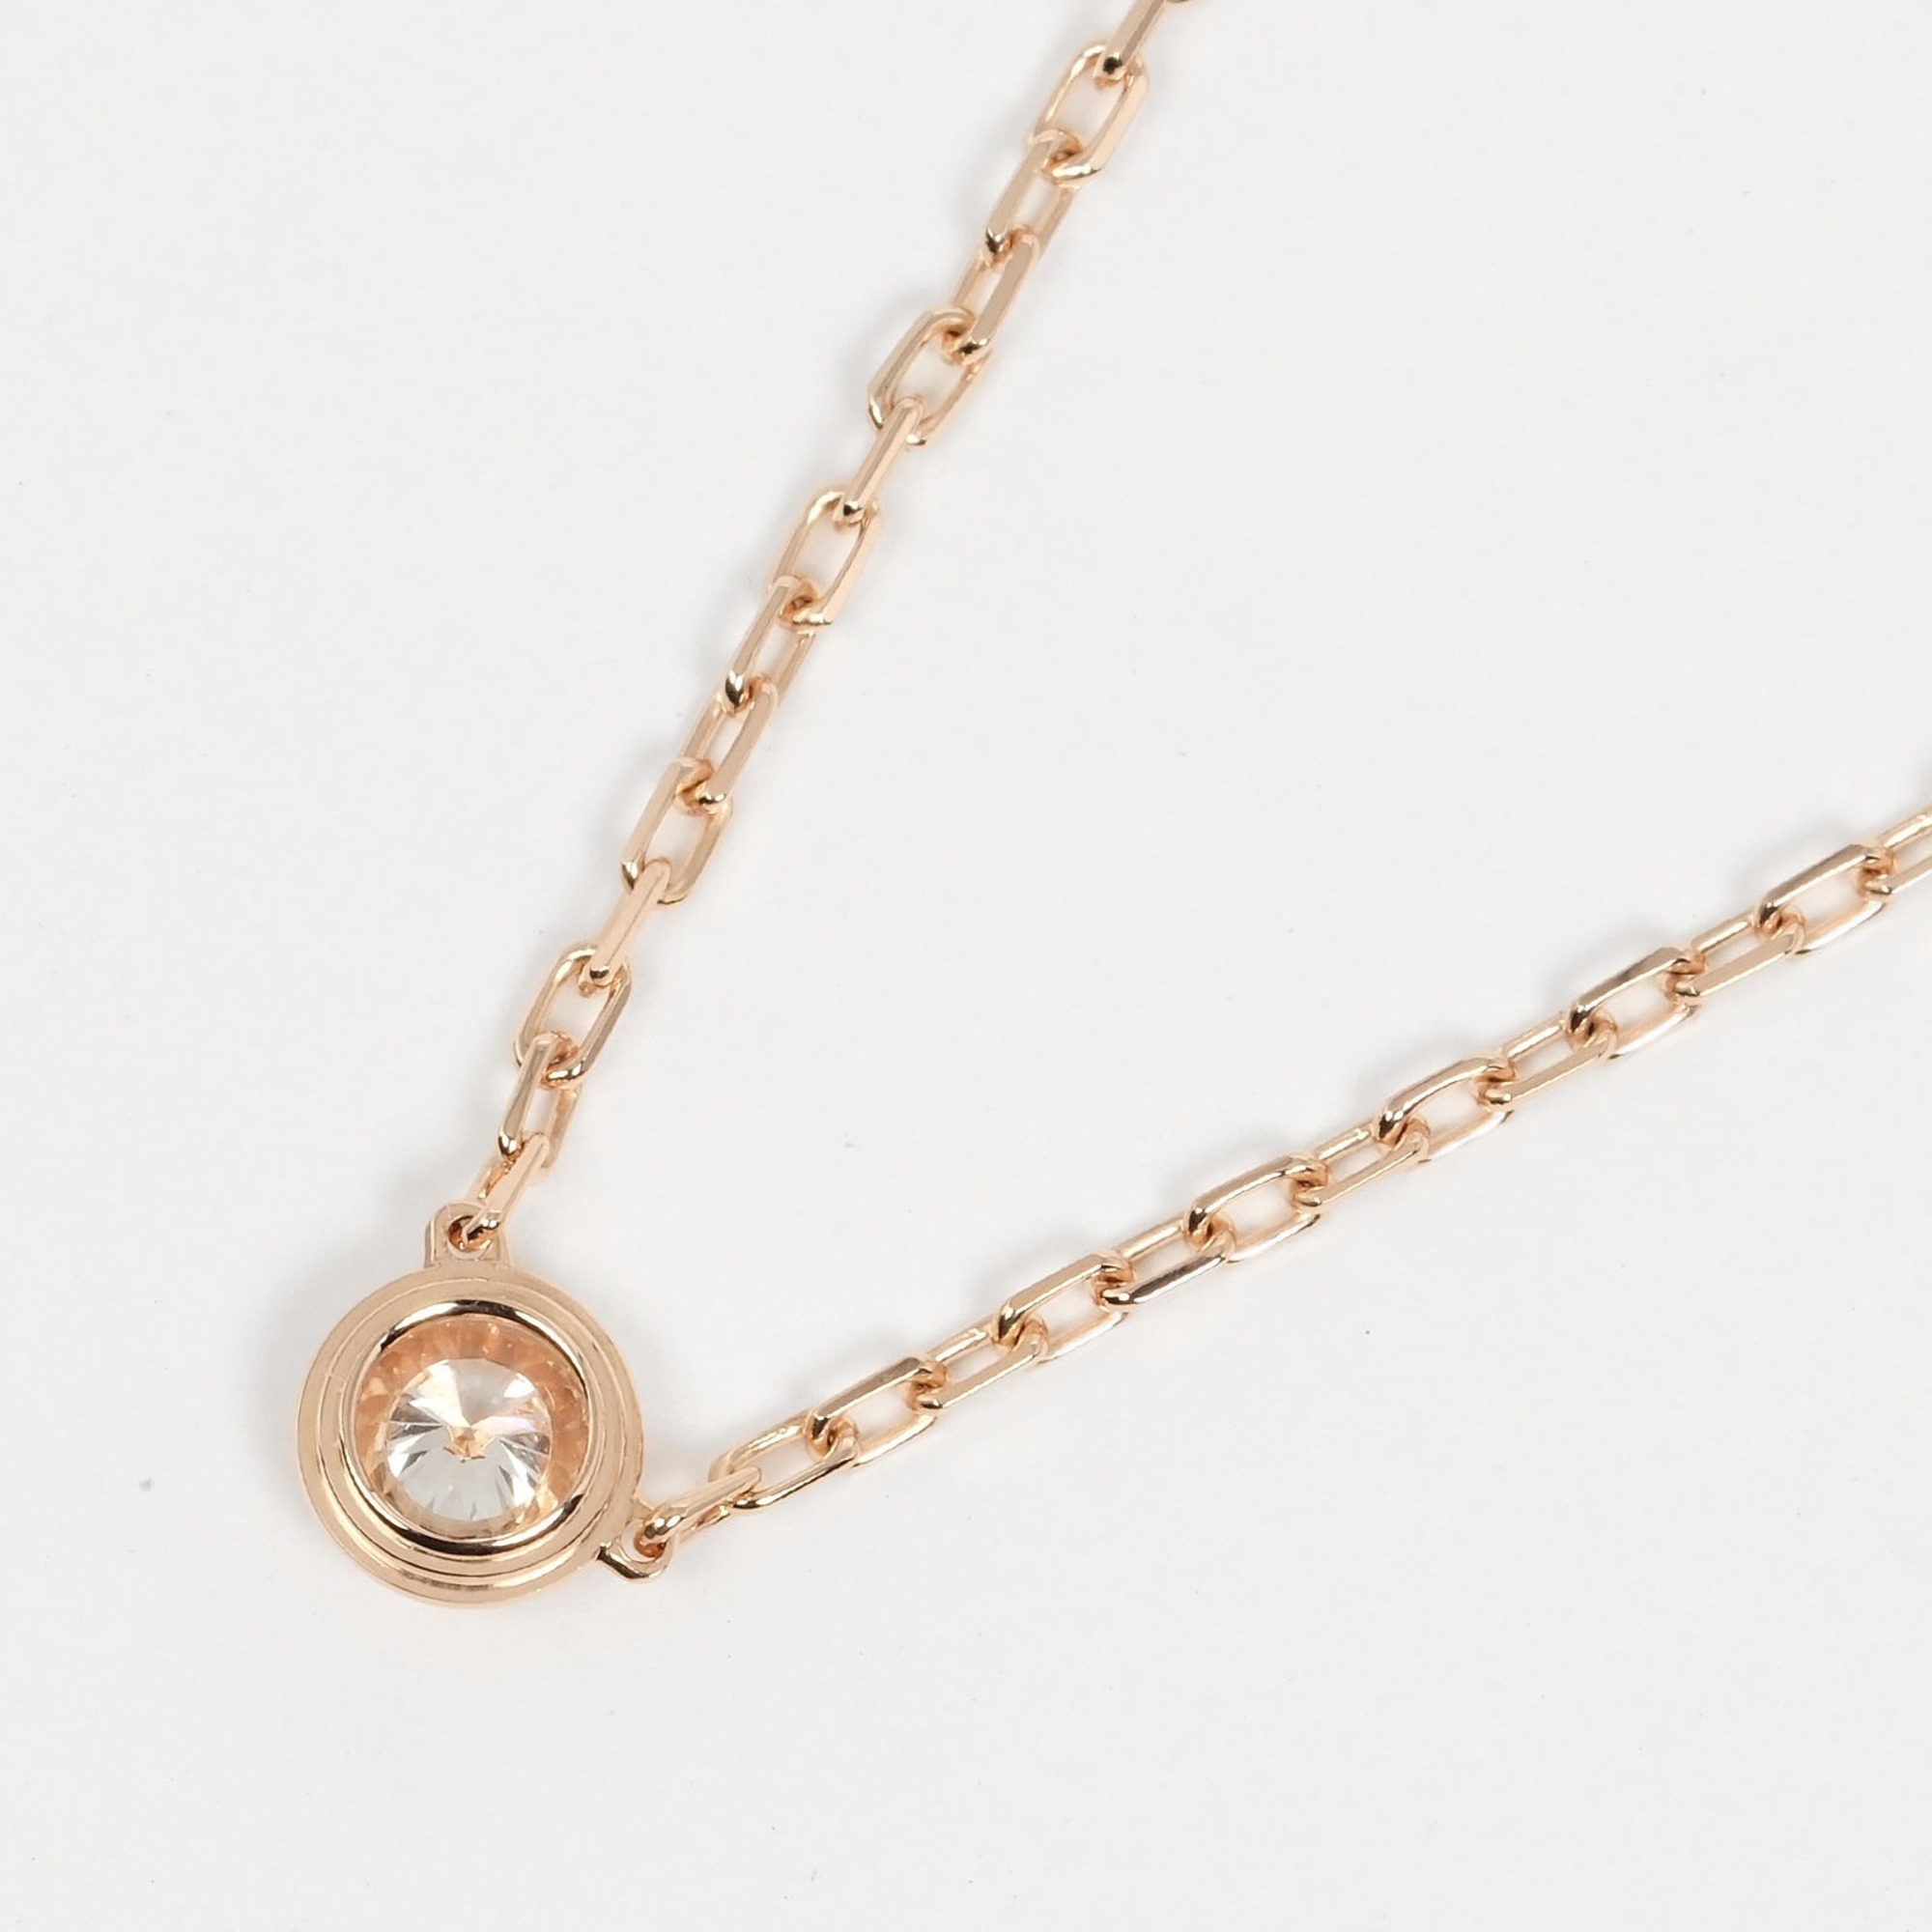 Cartier CARTIER Damour Diamant Leger SM Necklace Top 4.5mm K18 PG Pink Gold Diamond Approx. 2.81g I122924061